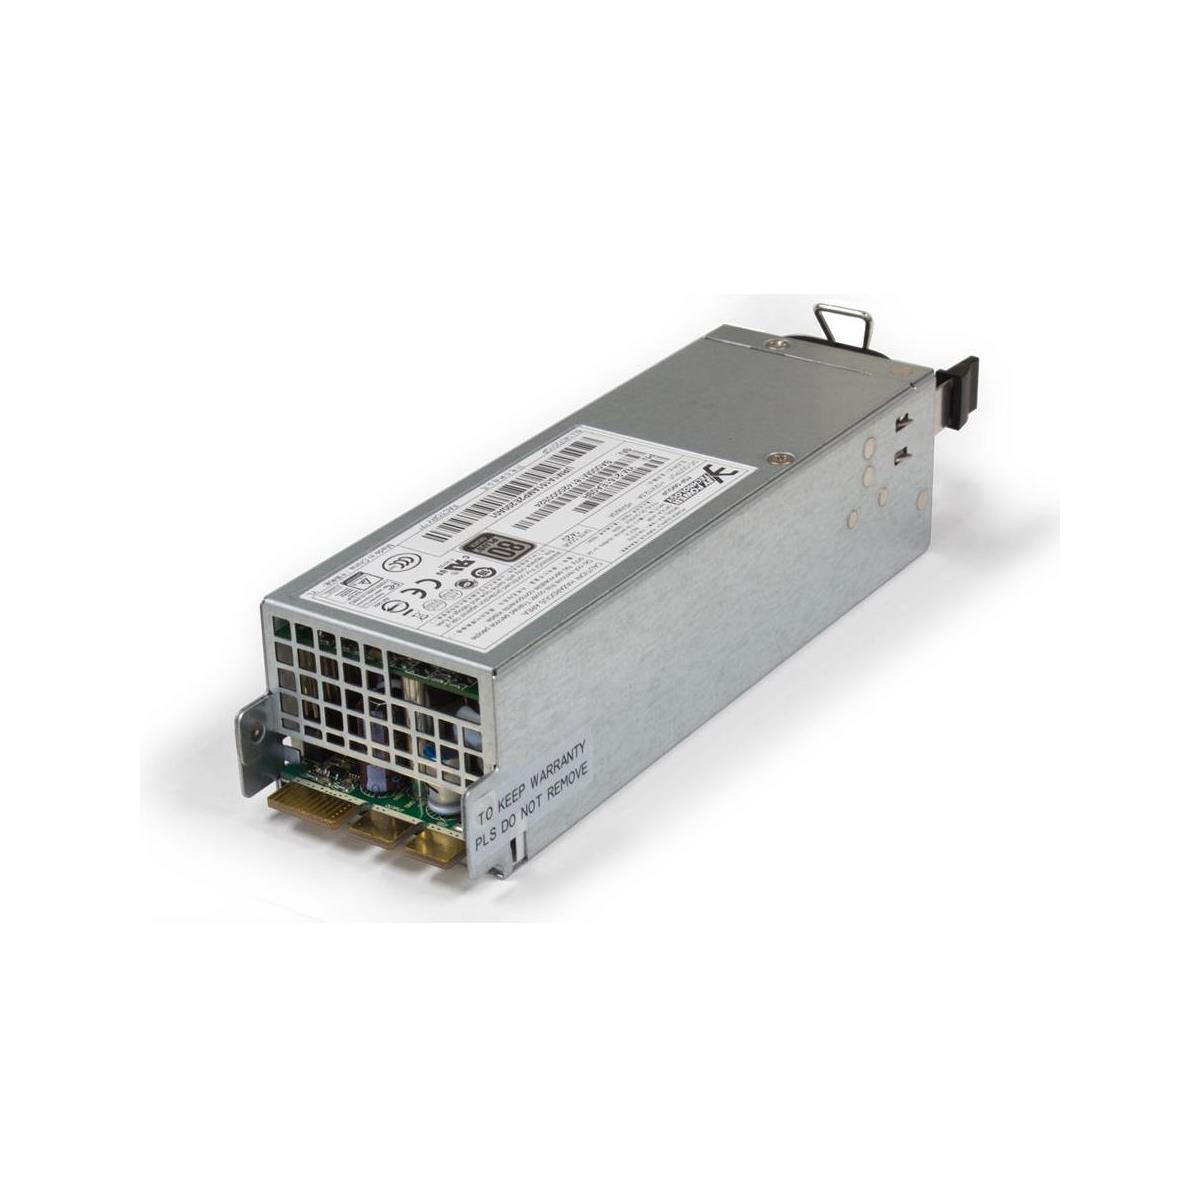 

ATTO Technology Rackmount Power Supply for FibreBridge 7500 Storage Controller